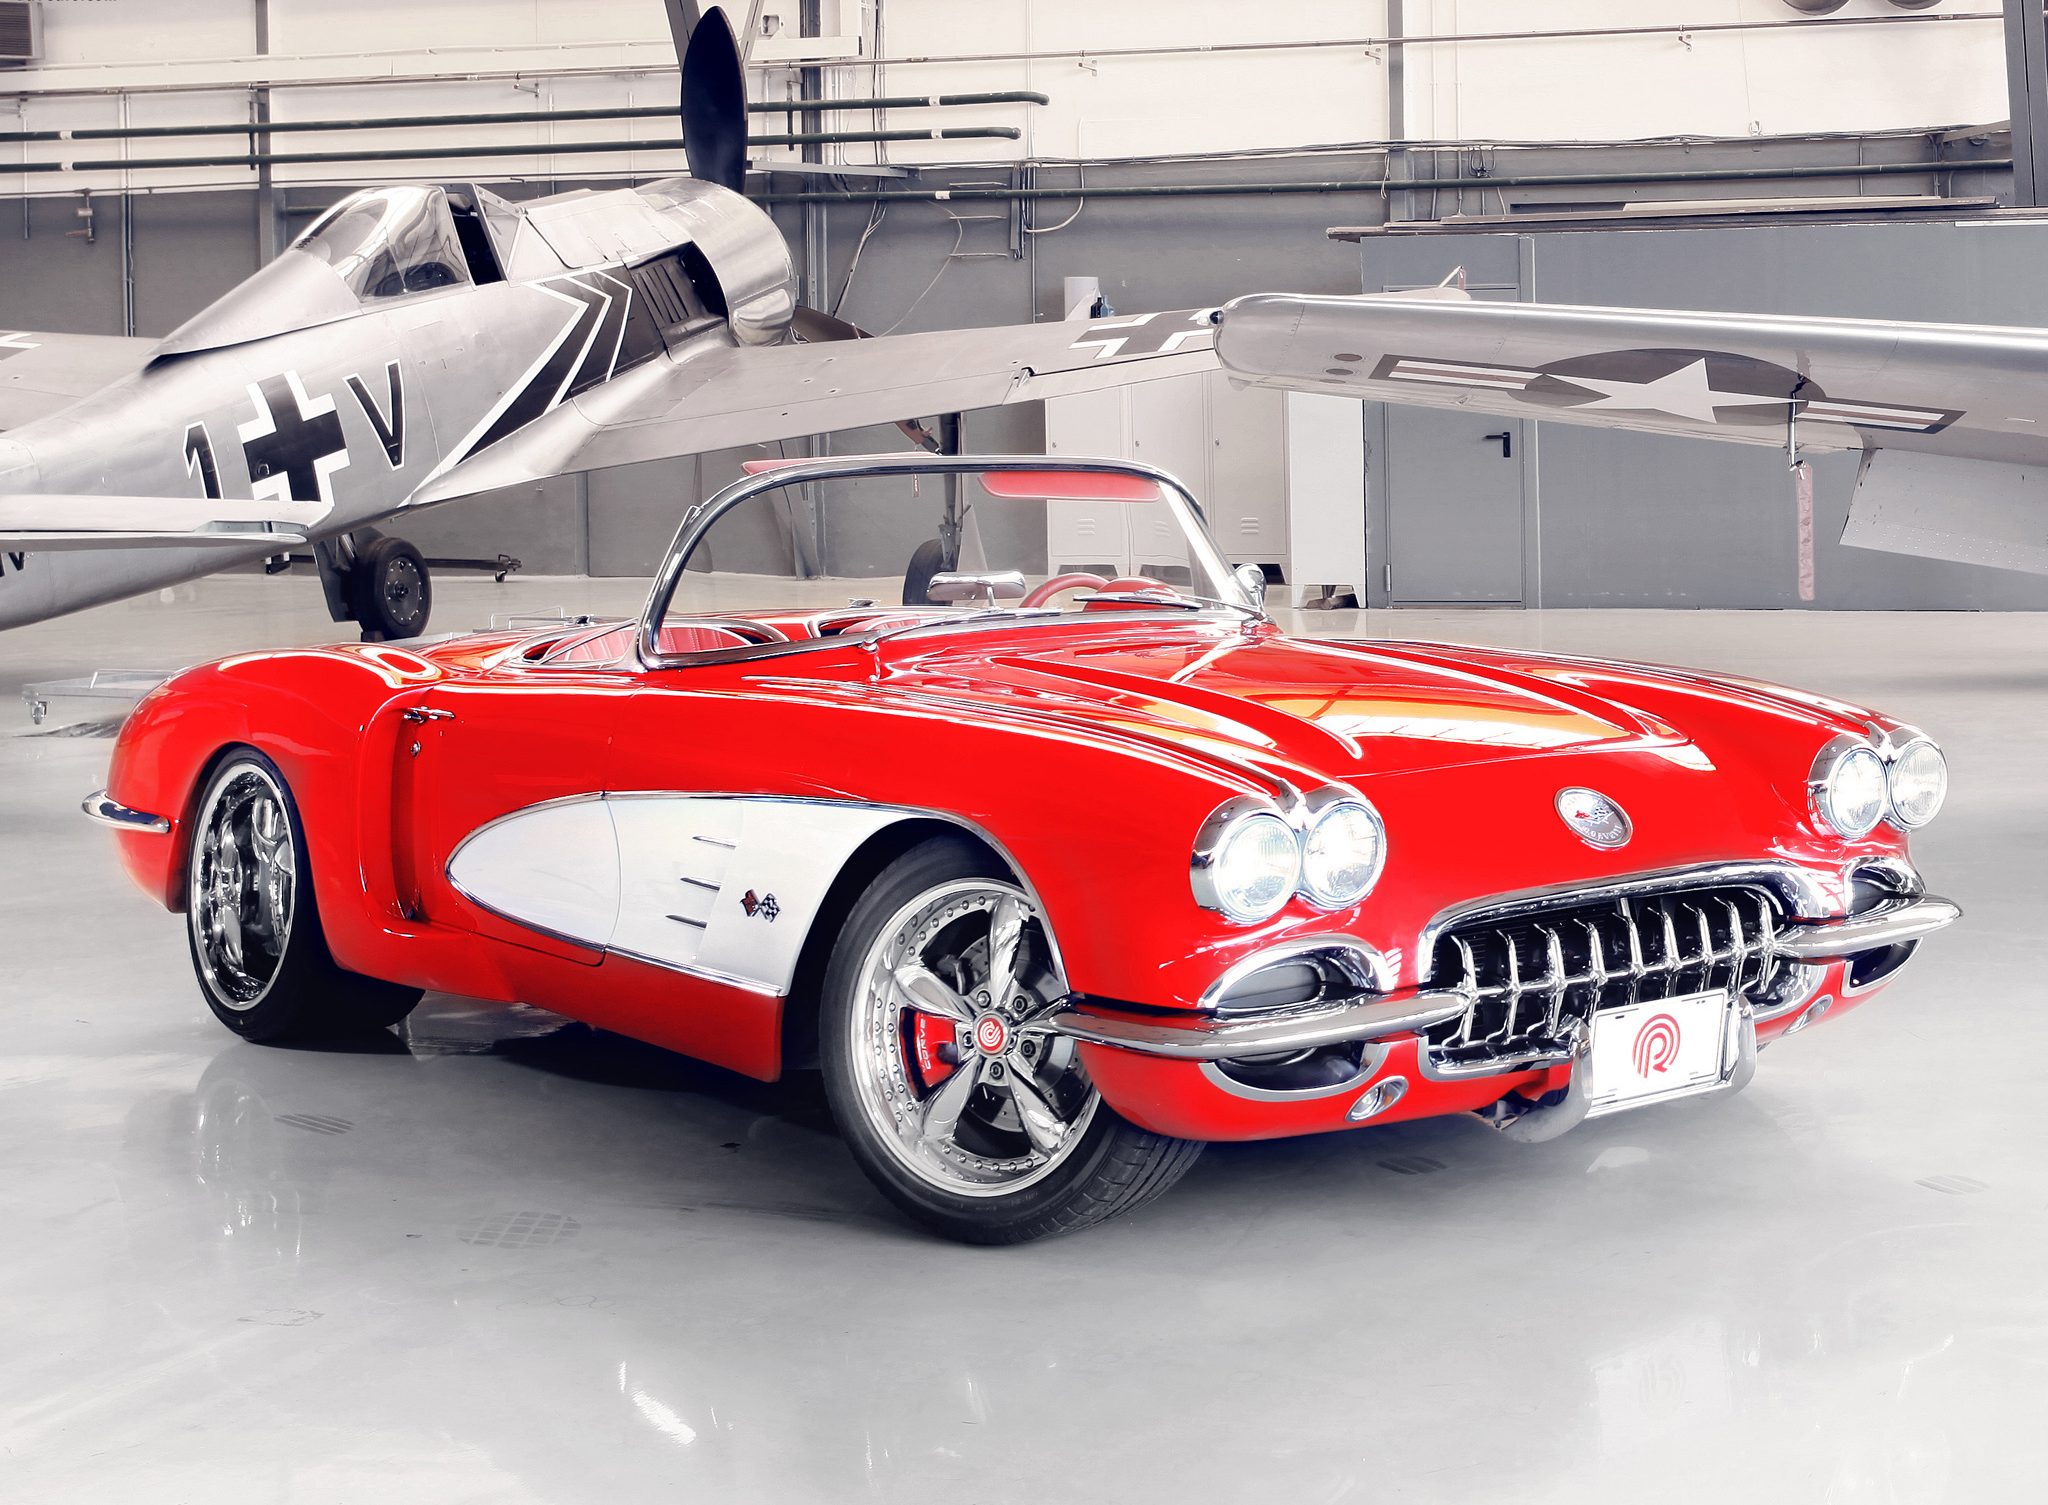 Corvette Of The Day: 1959 Chevrolet Corvette By Pogea Racing